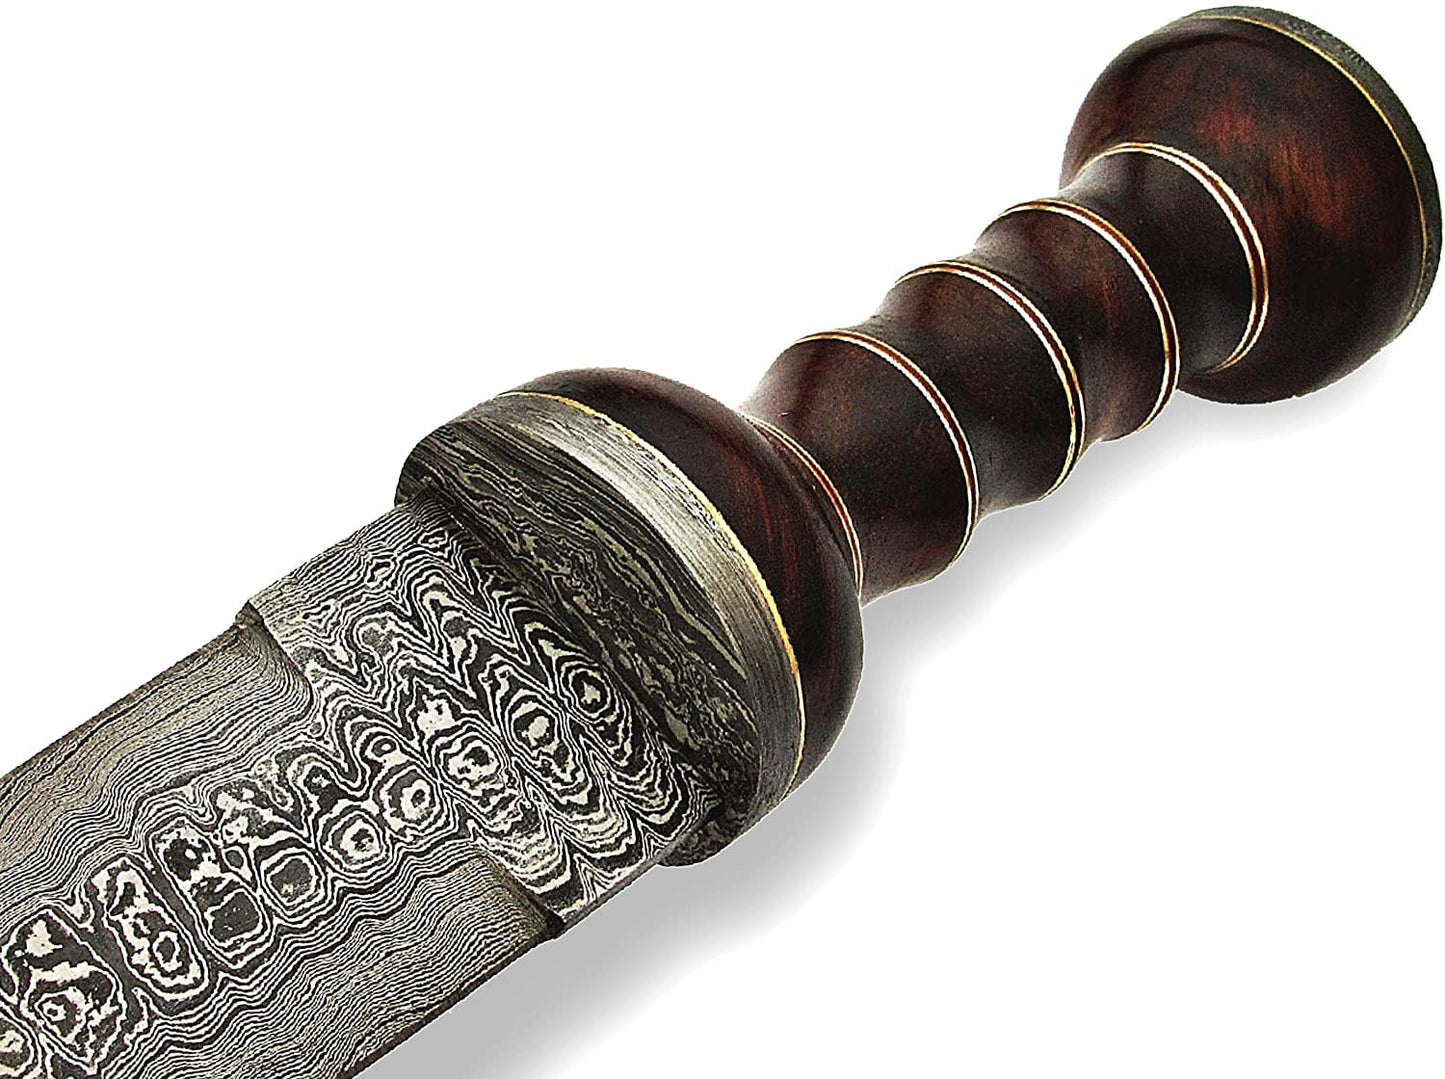 REG-2197 - Custom Handmade Damascus Steel 17 Inches Dirk Blade Knife - Perfect Grip Rose Wood Handle Scottish Dir